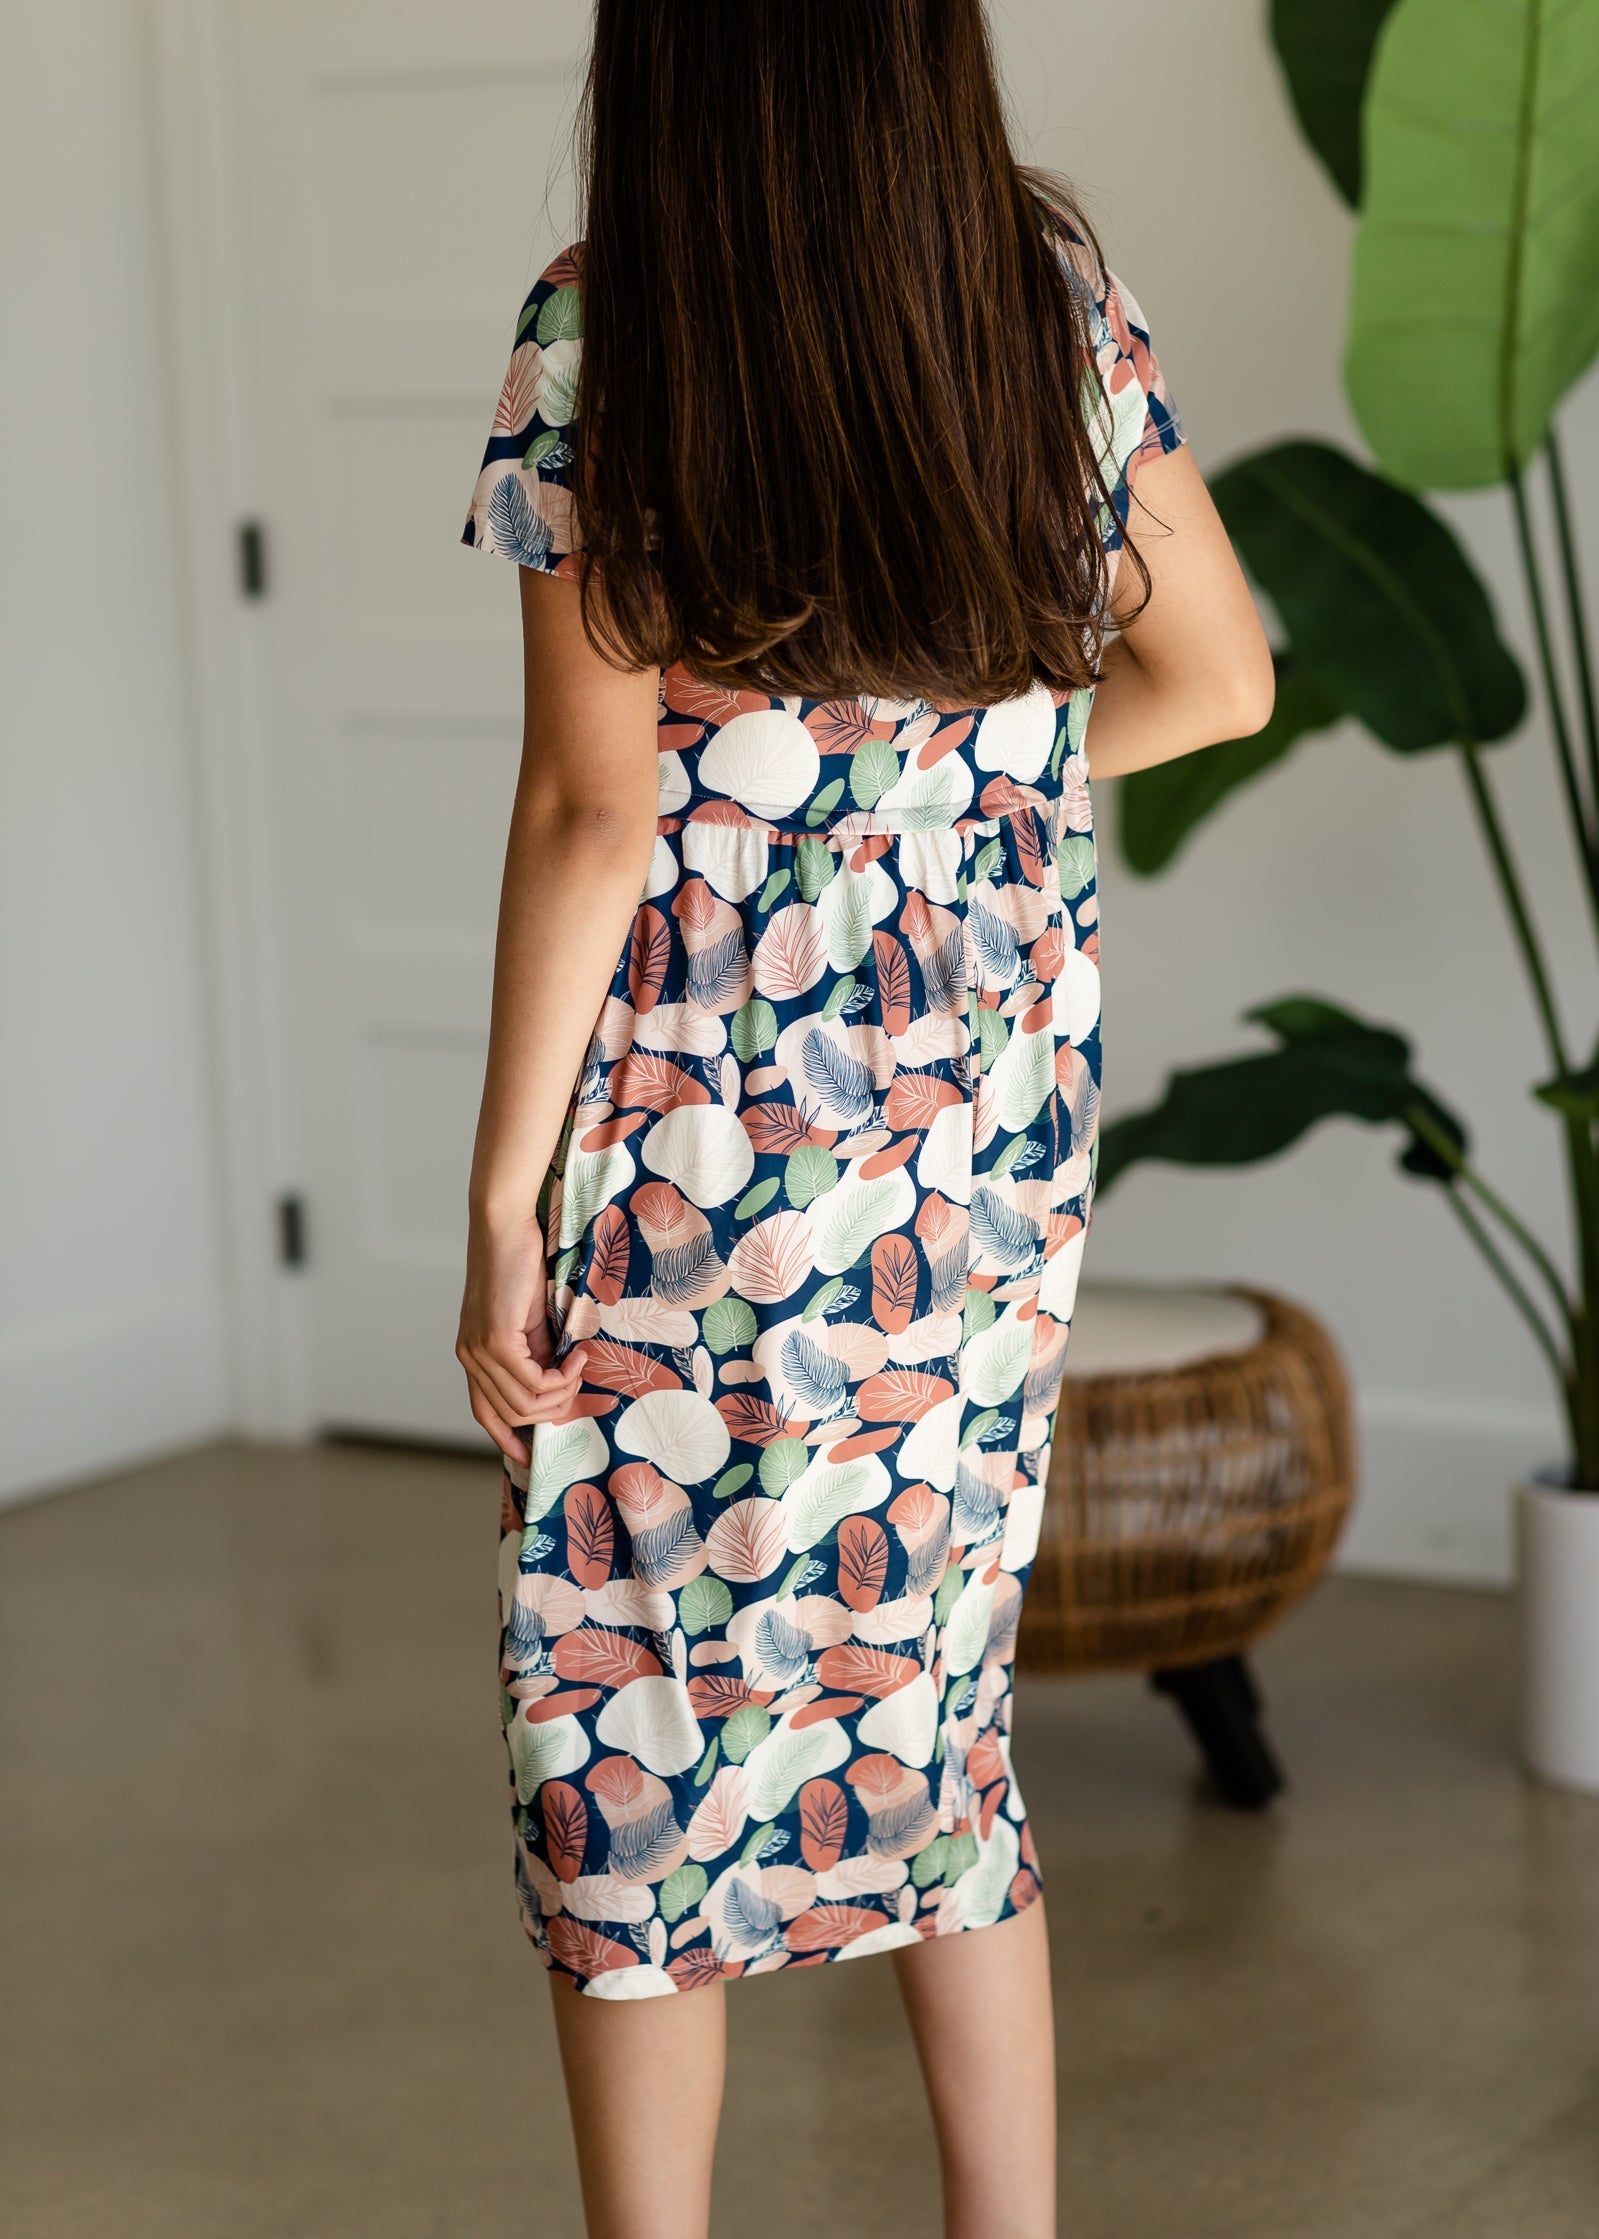 Aspen Leaf Print Midi Dress - FINAL SALE Dresses